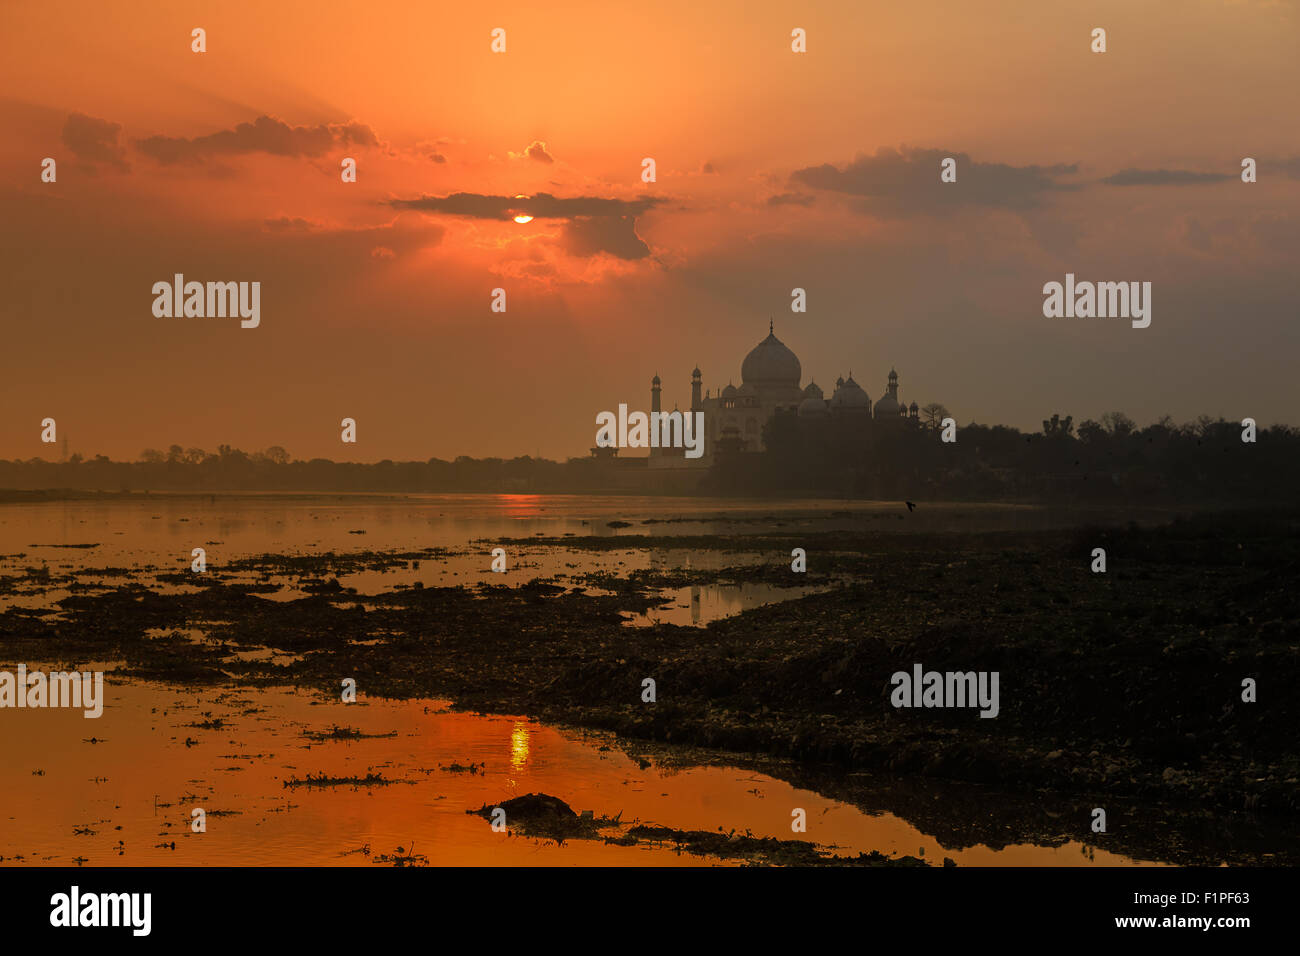 A sunrise view of Taj Mahal in Agra, India. Stock Photo